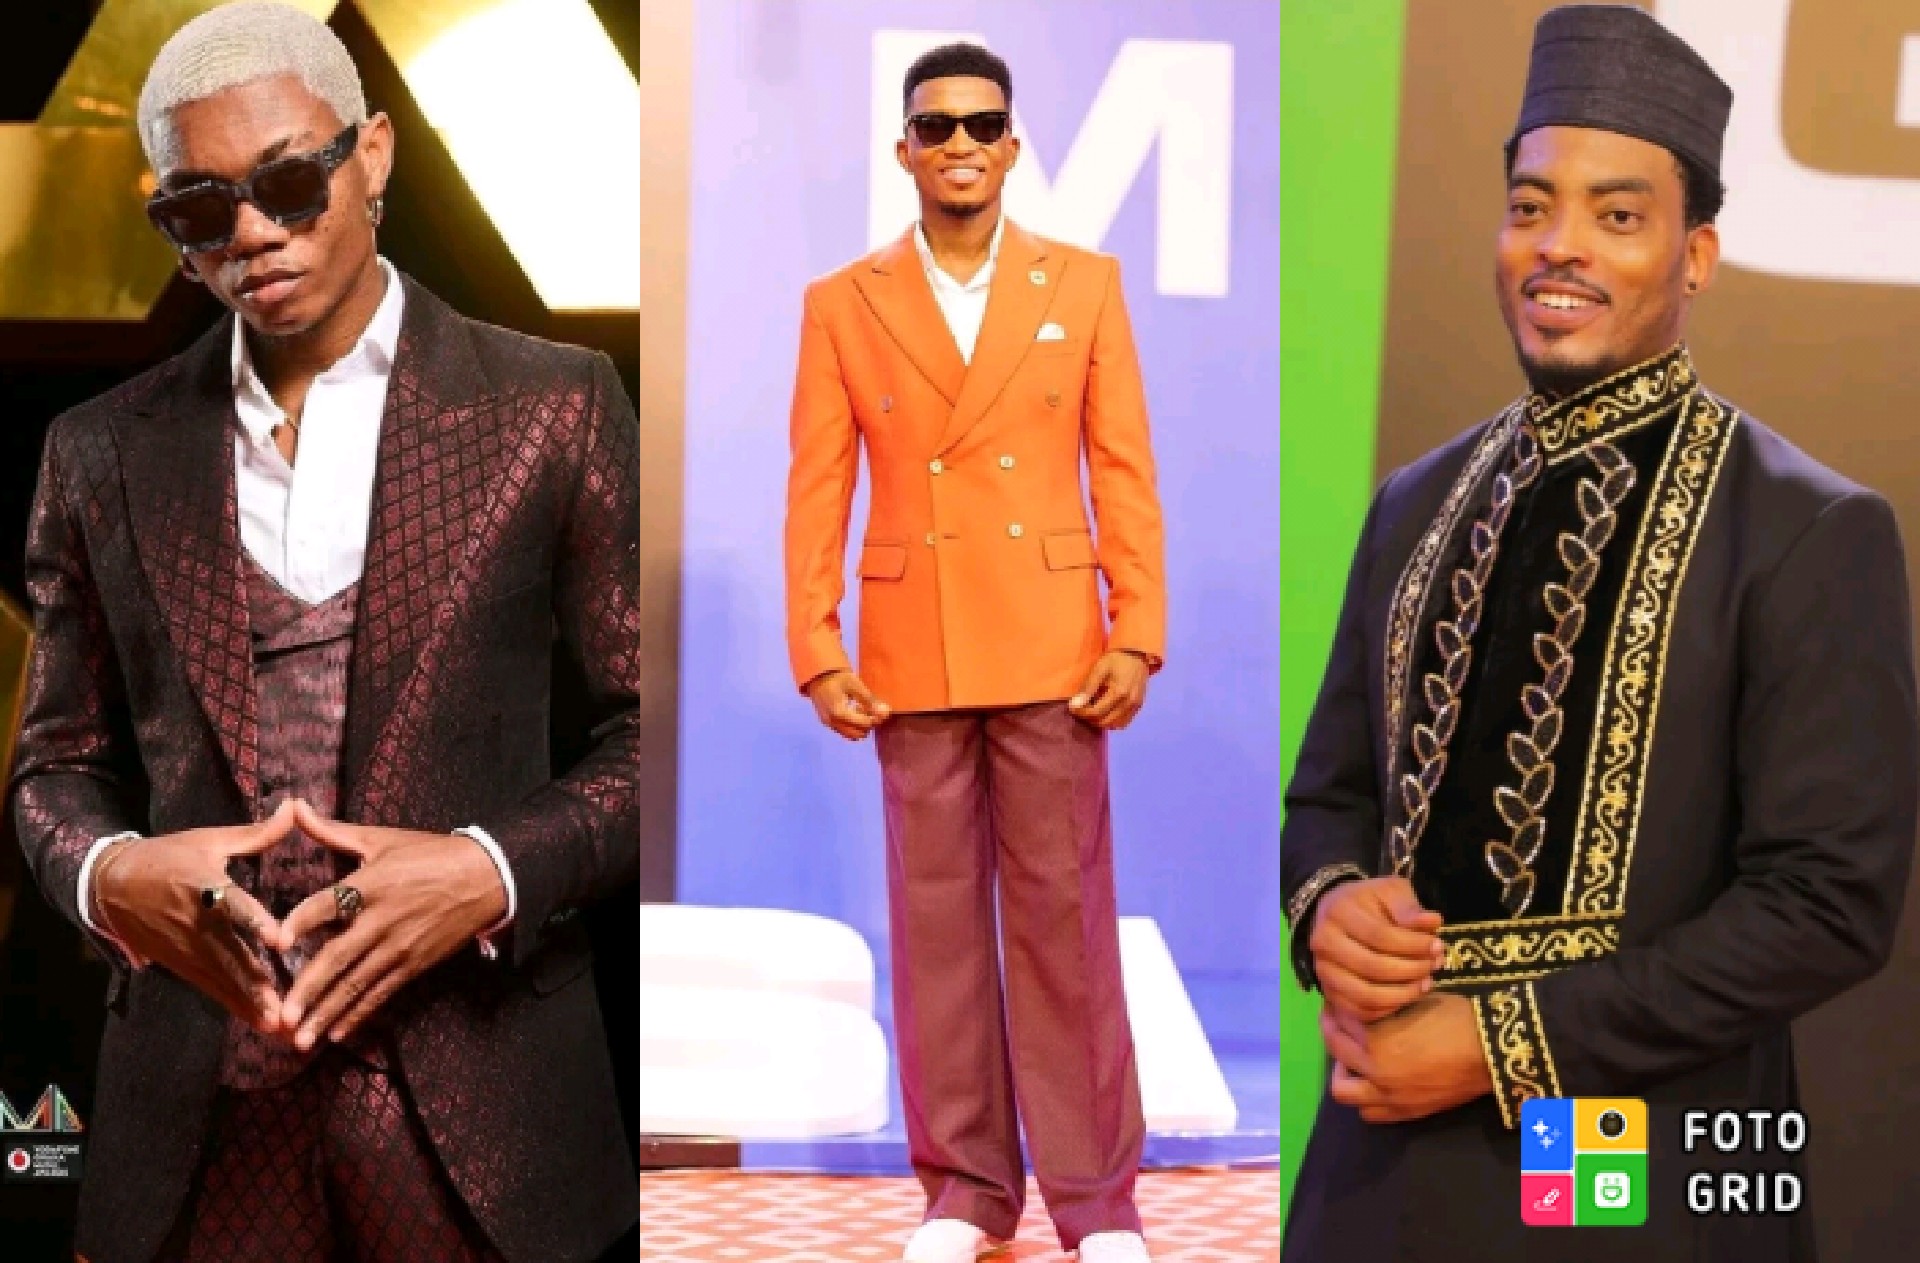 VGMA best dressed males: KiDi, Majid, Mawuli Gavor stood out on the red carpet